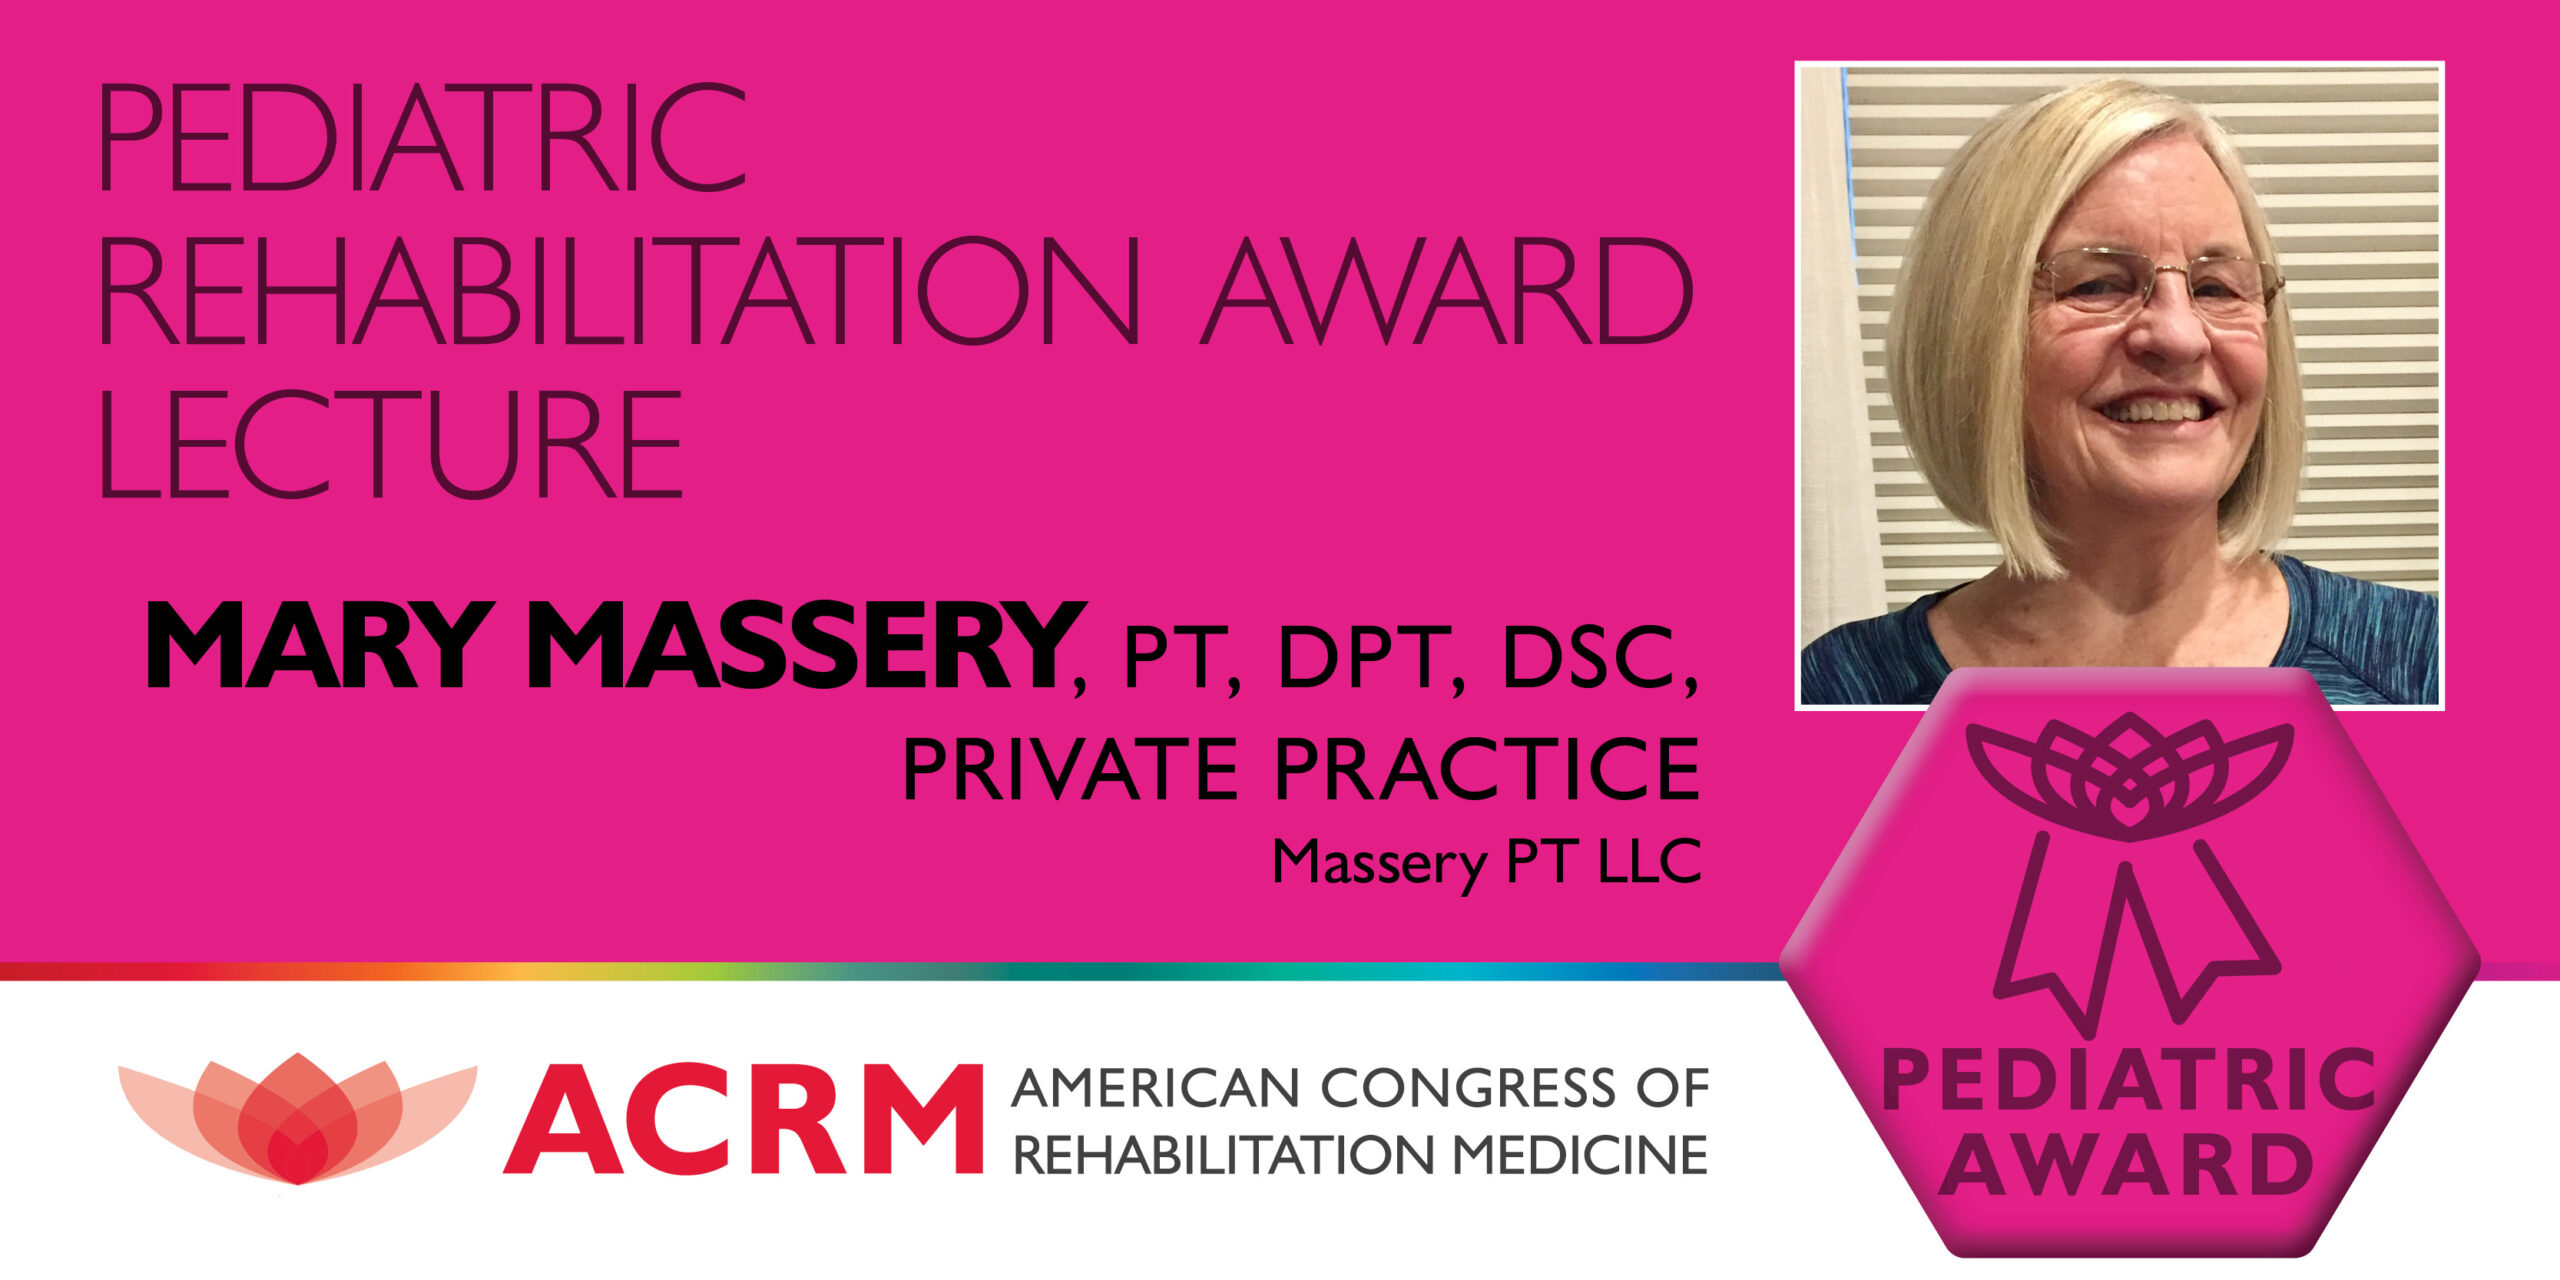 Jennifer Christy received the ACRM 2021 Pediatric Rehabilitation Award